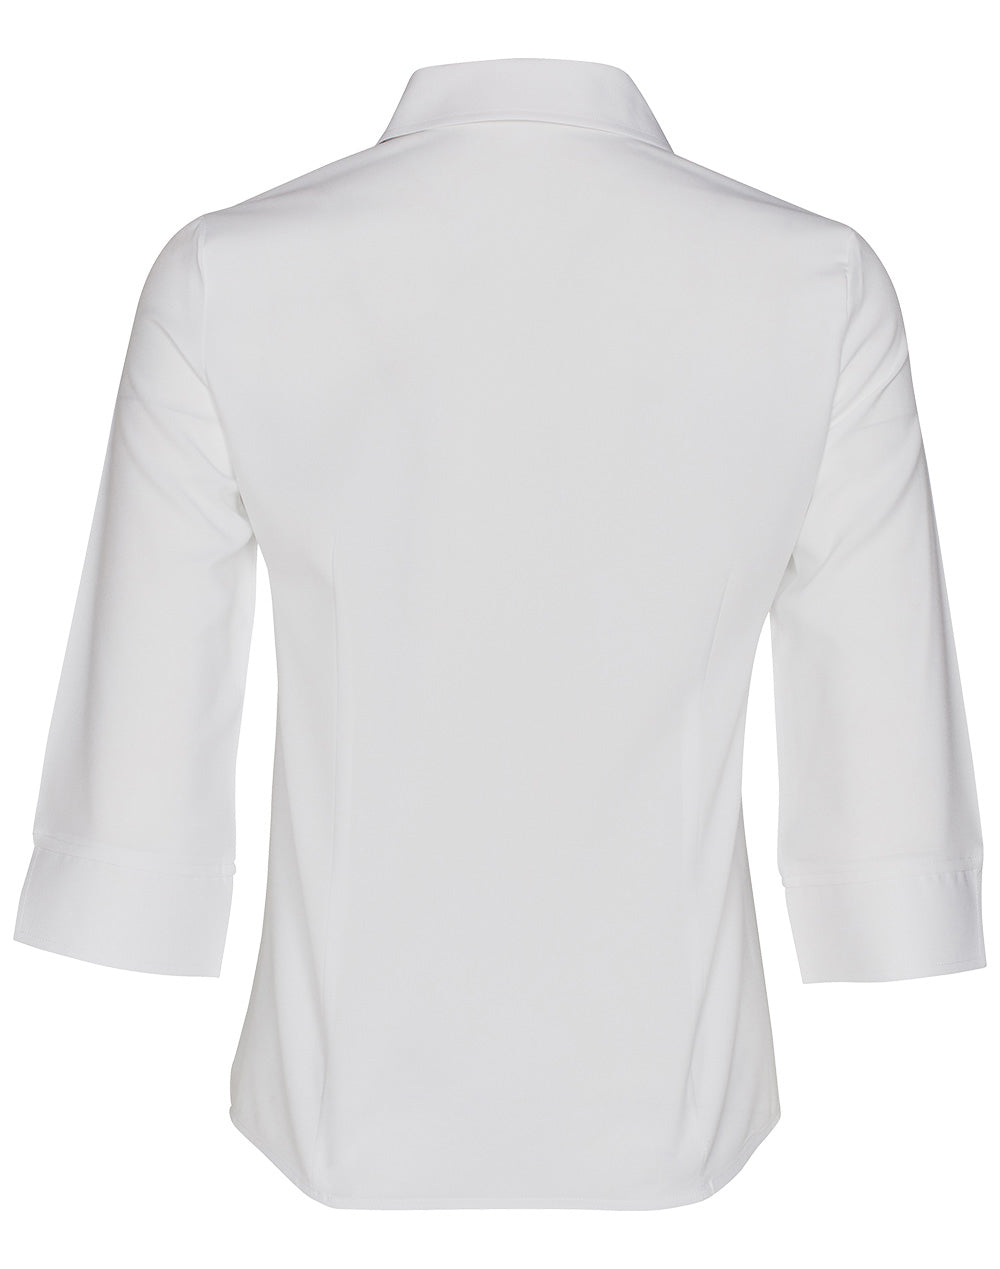 Benchmark M8600Q Women's CoolDry 3/4 Sleeve Shirt